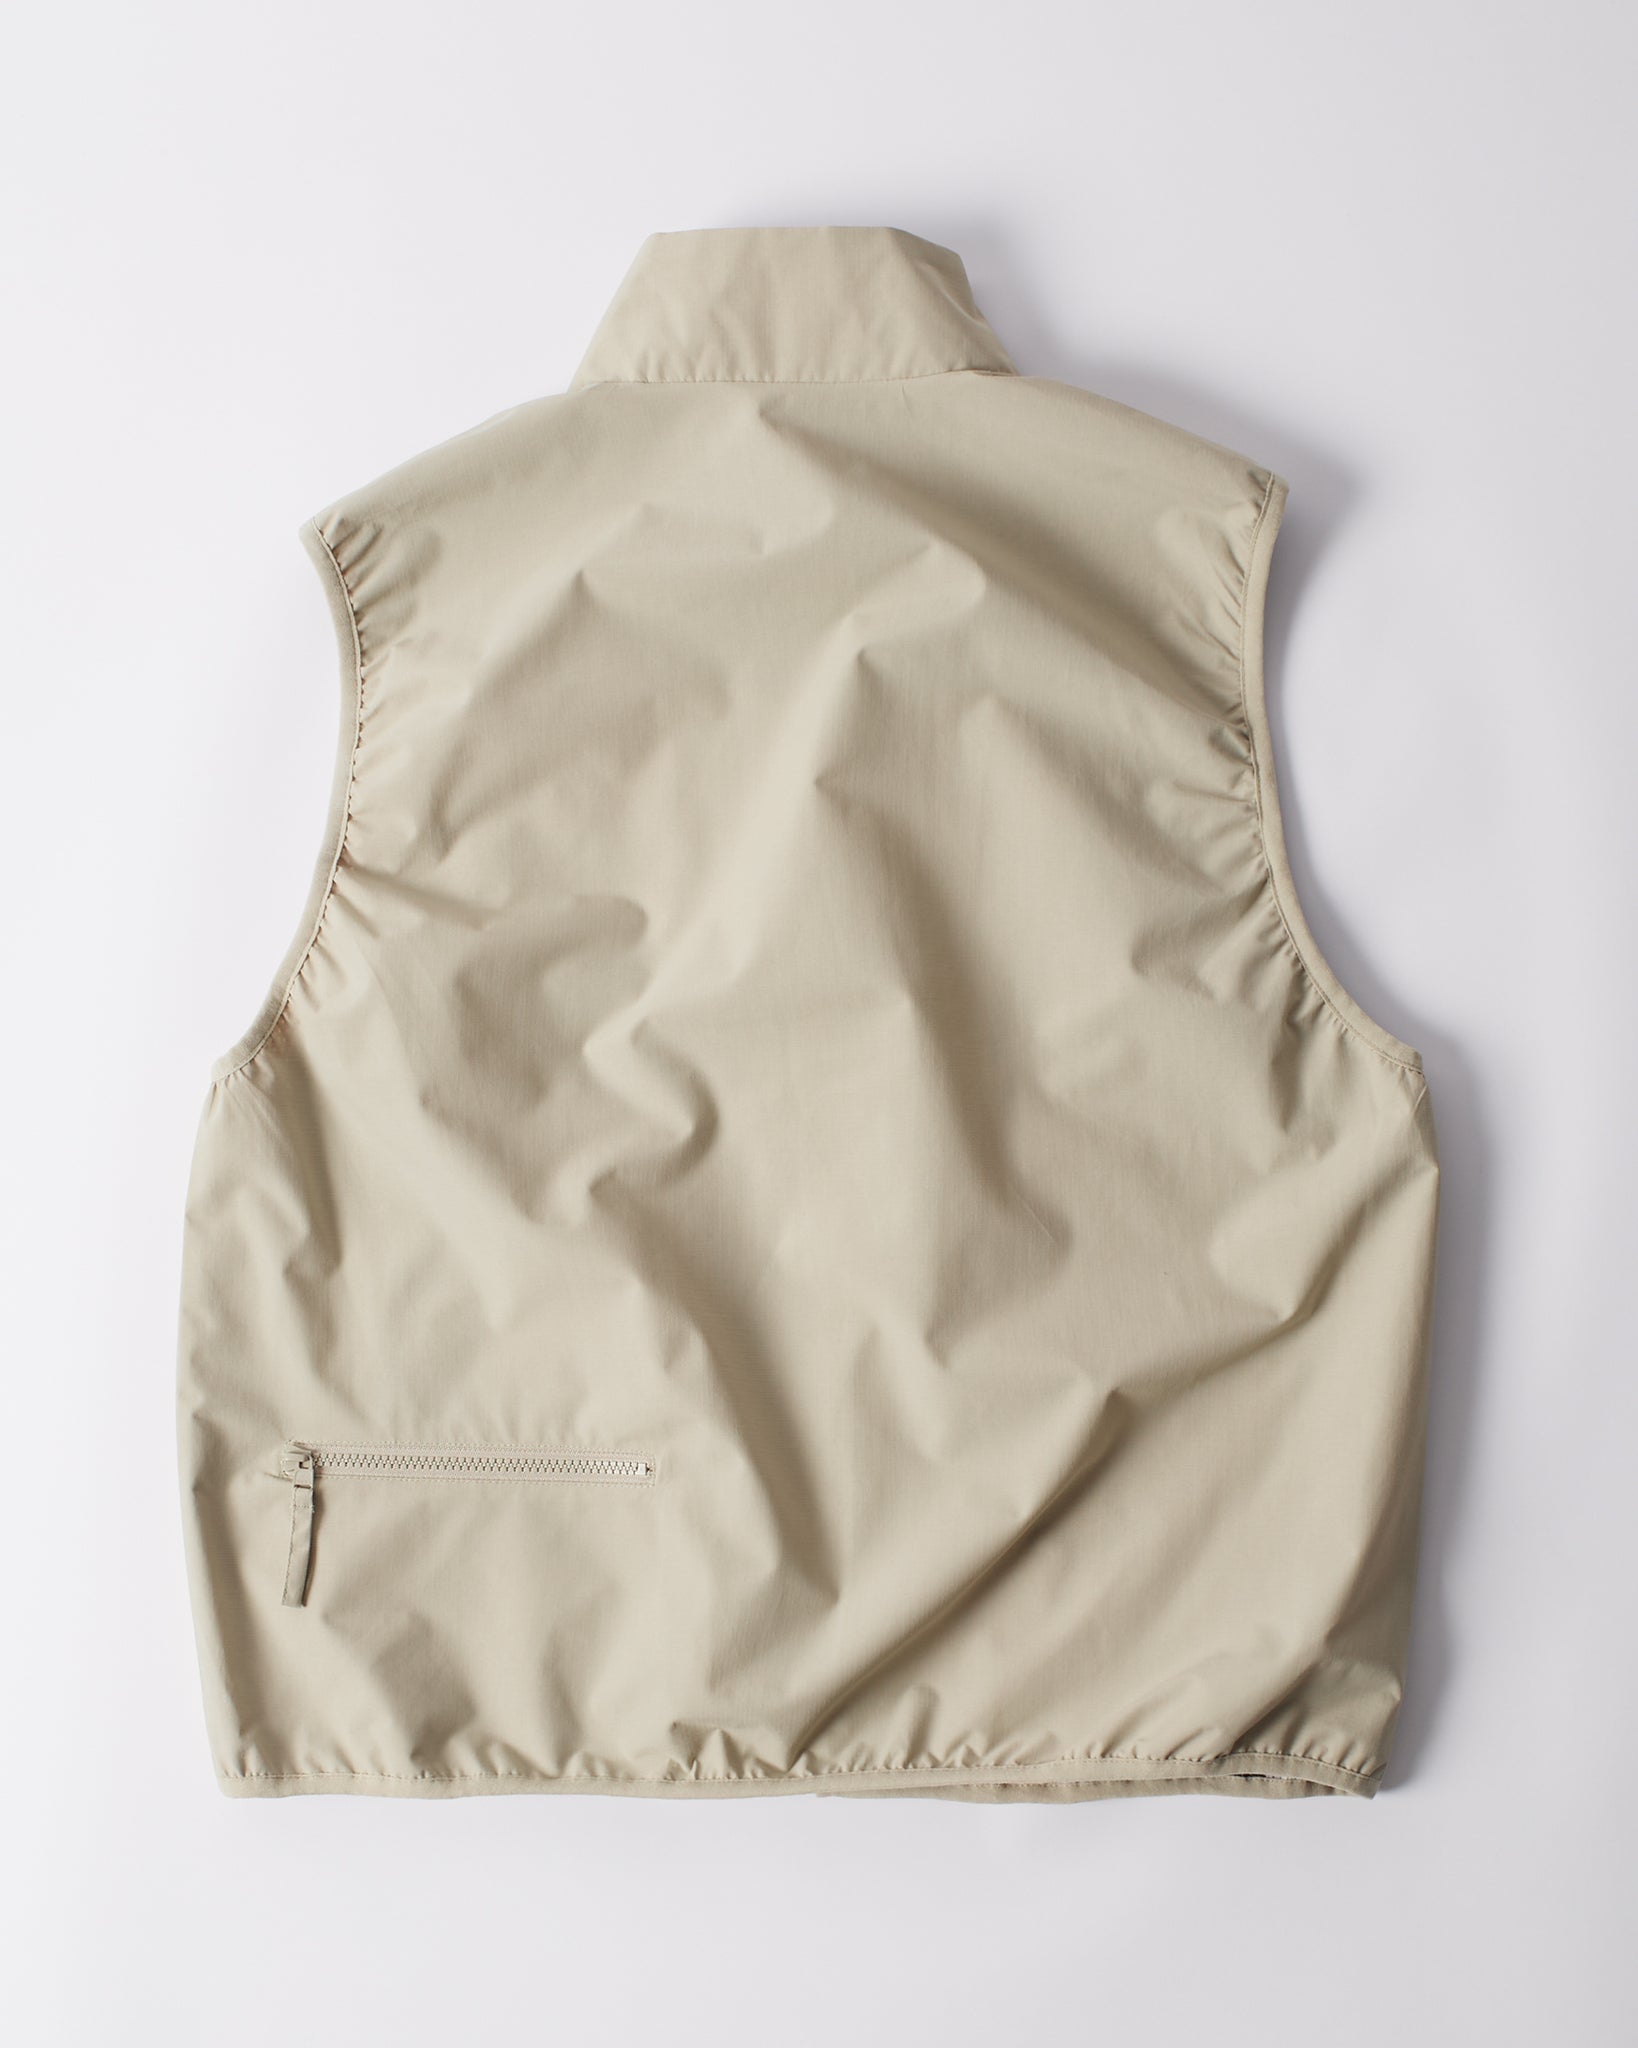 Ghost Cave Reversible Vest